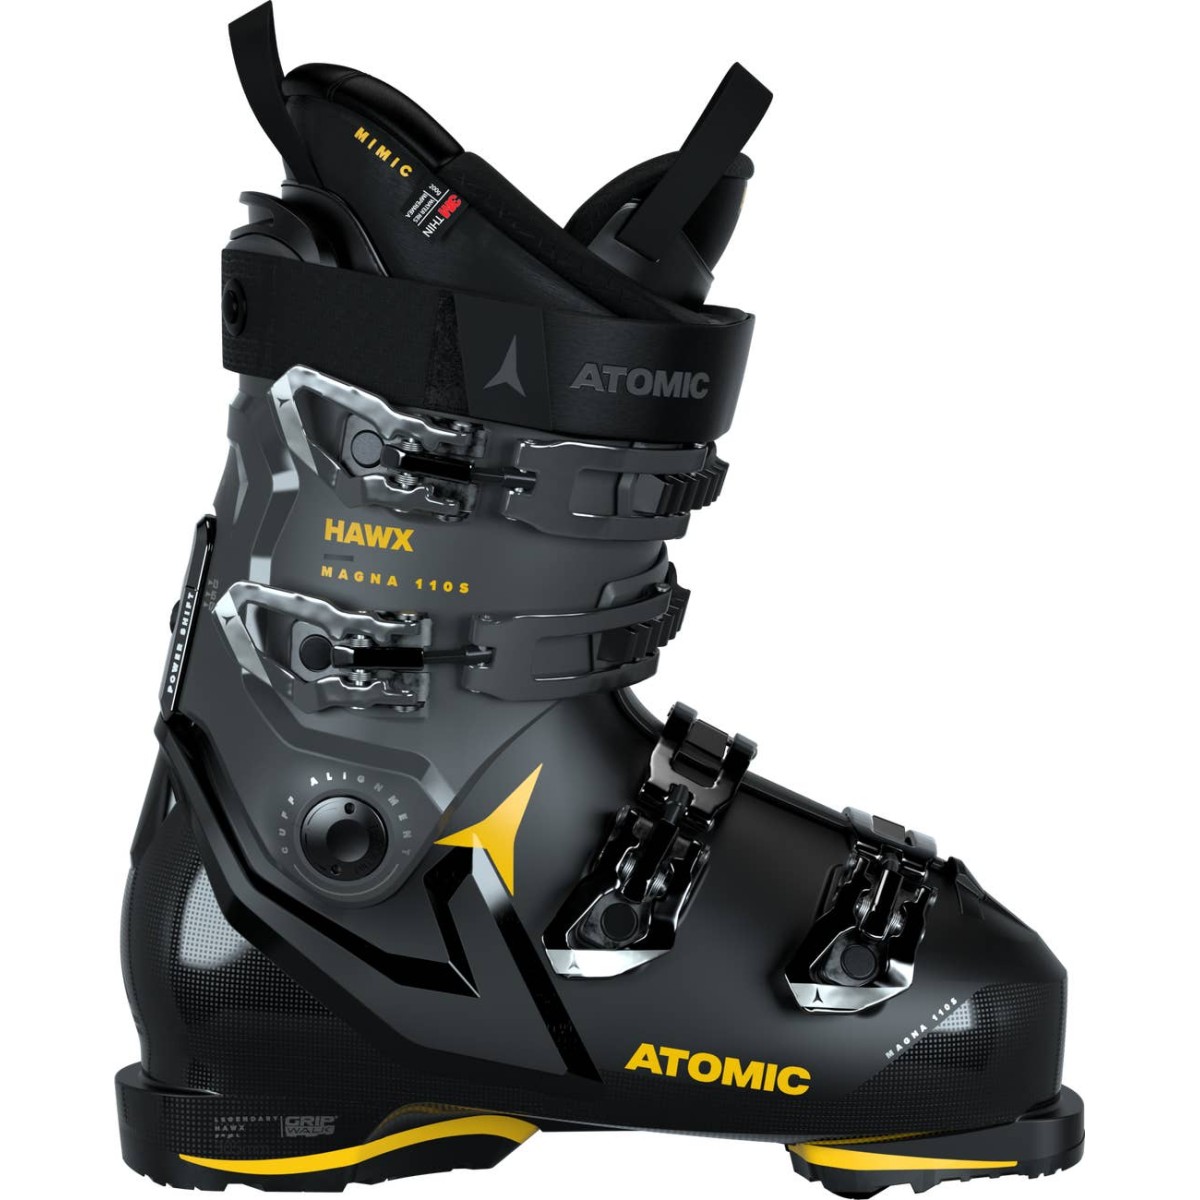 ATOMIC HAWX MAGNA 110 S GW kalnu slēpošanas zābaki - black/anthra/yellow